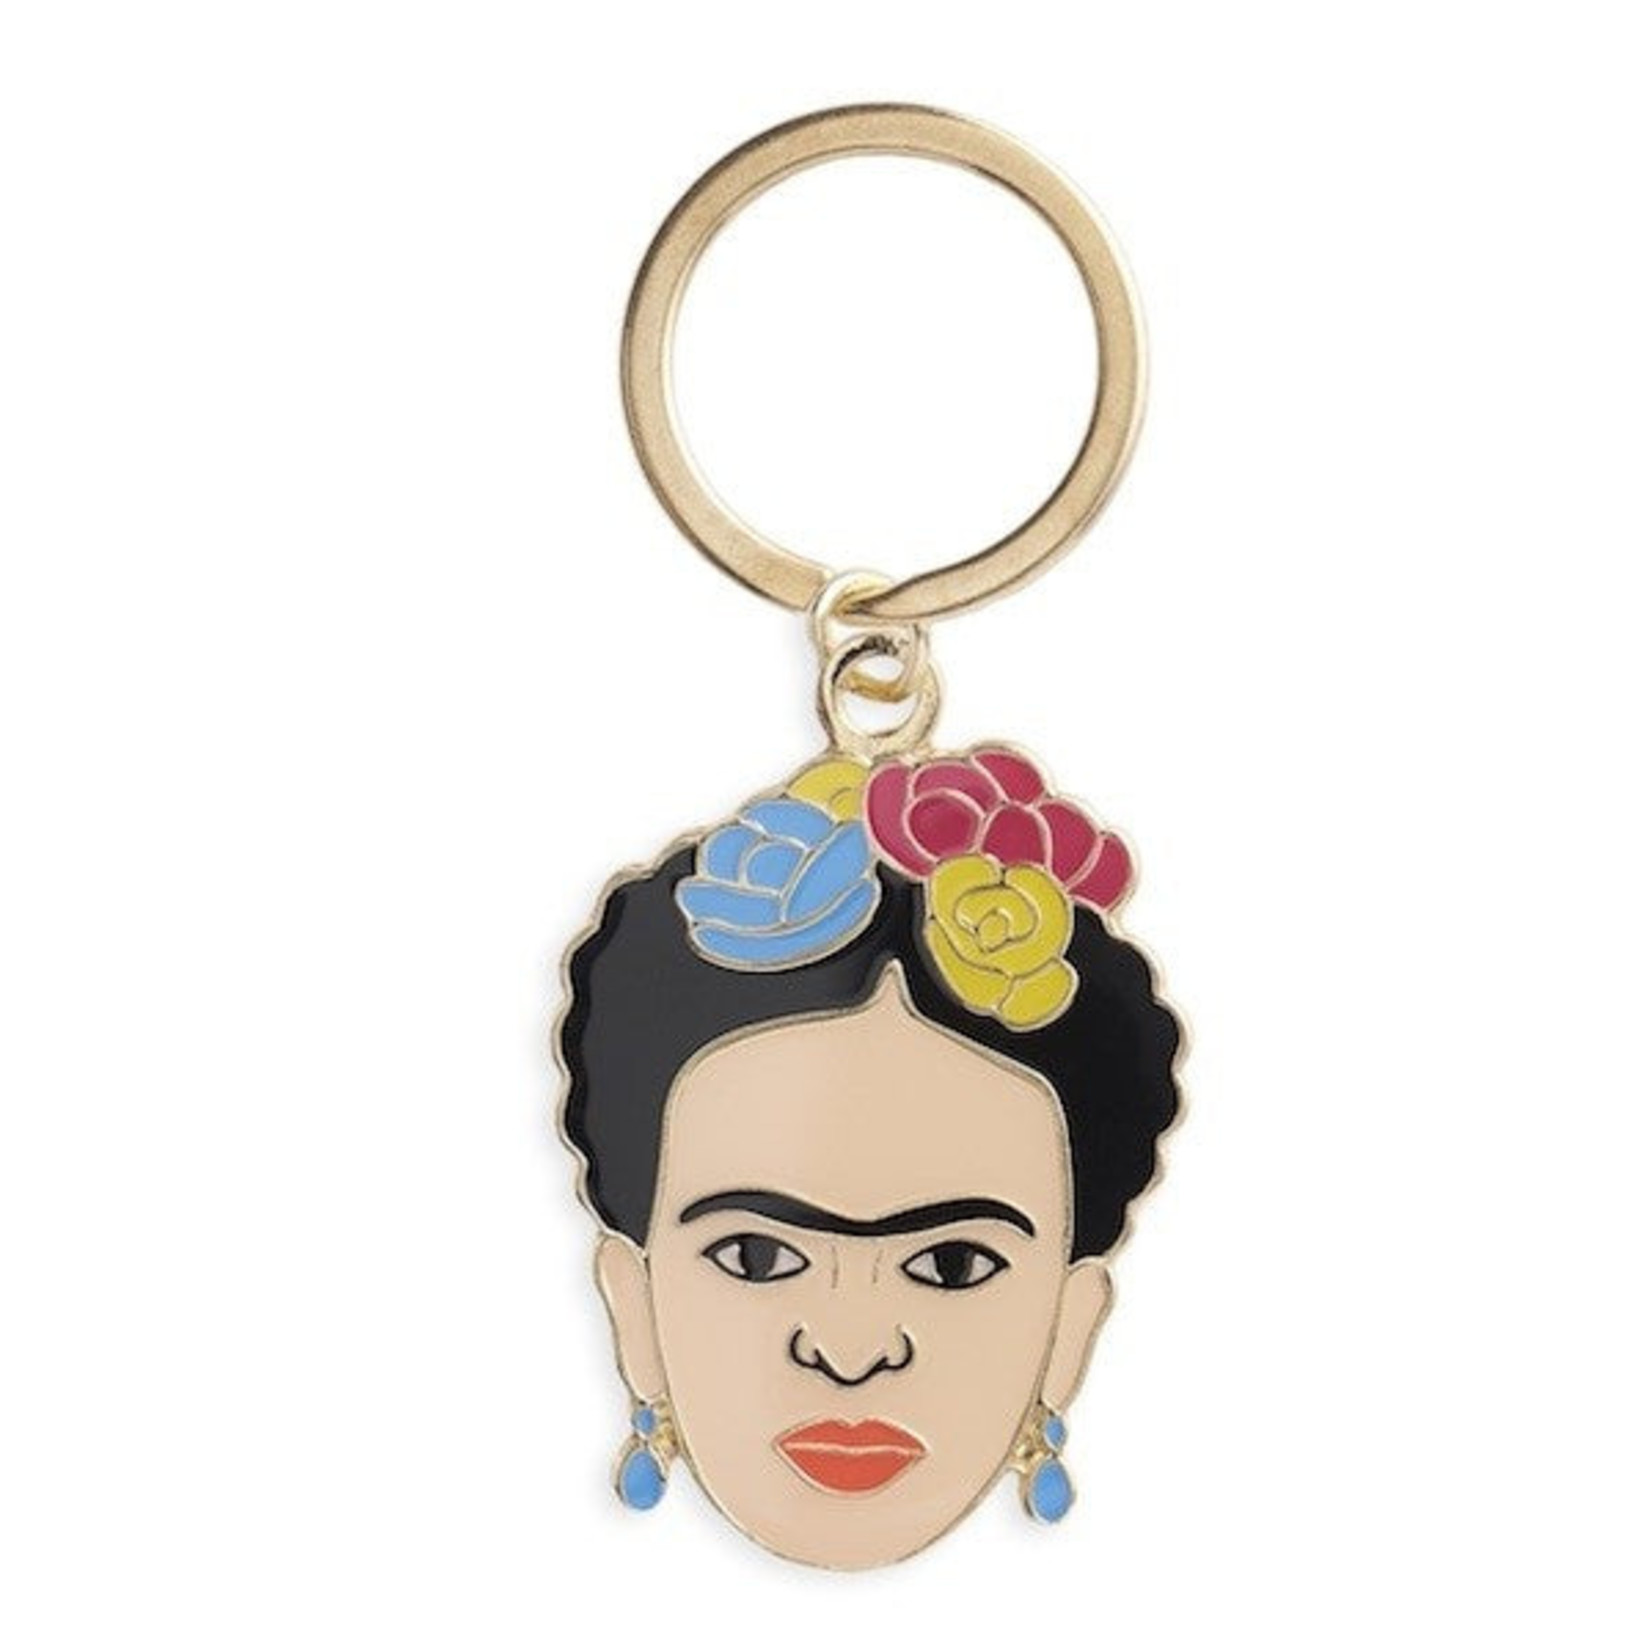 The Found Frida Enamel Keychain